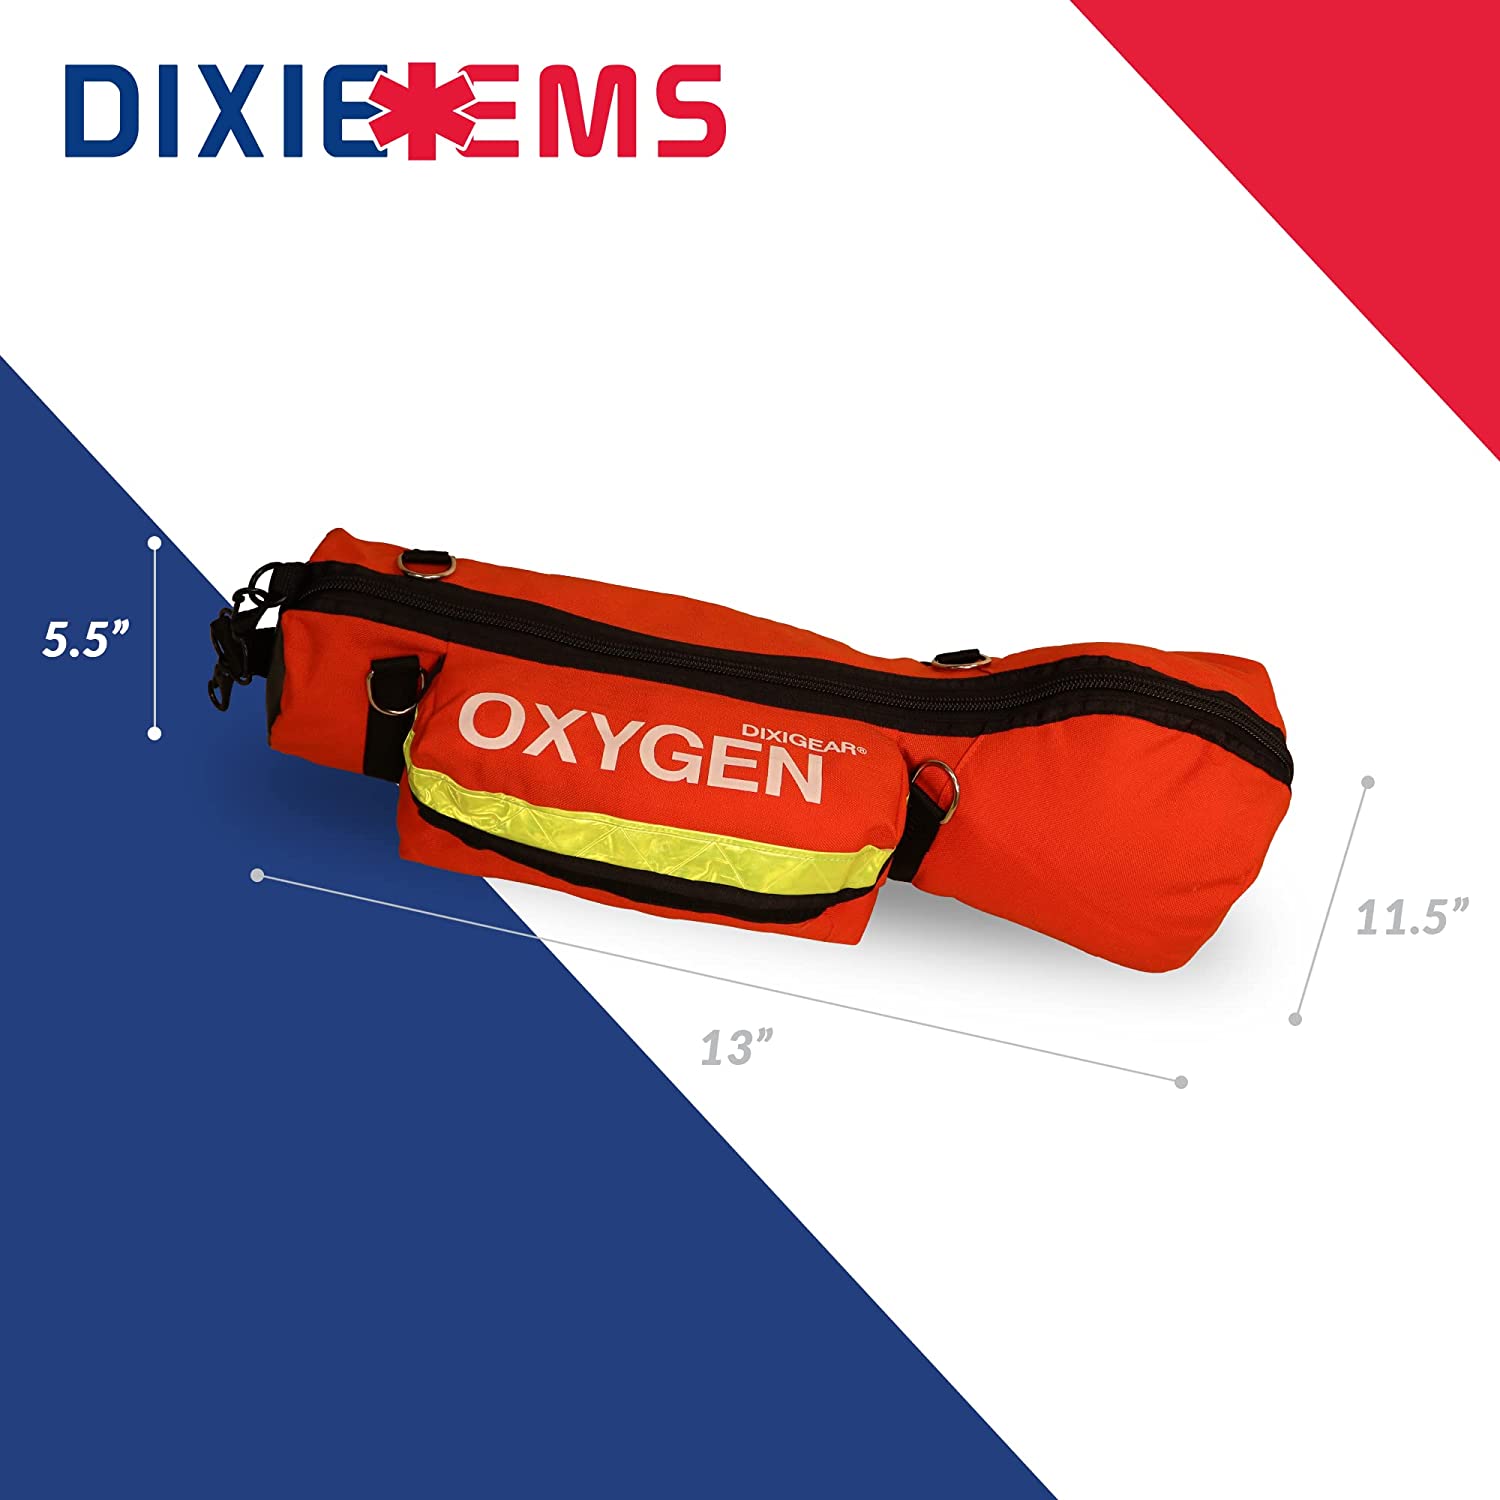 Padded Oxygen O2 Carry Bag for Cylinder Oxygen Tank